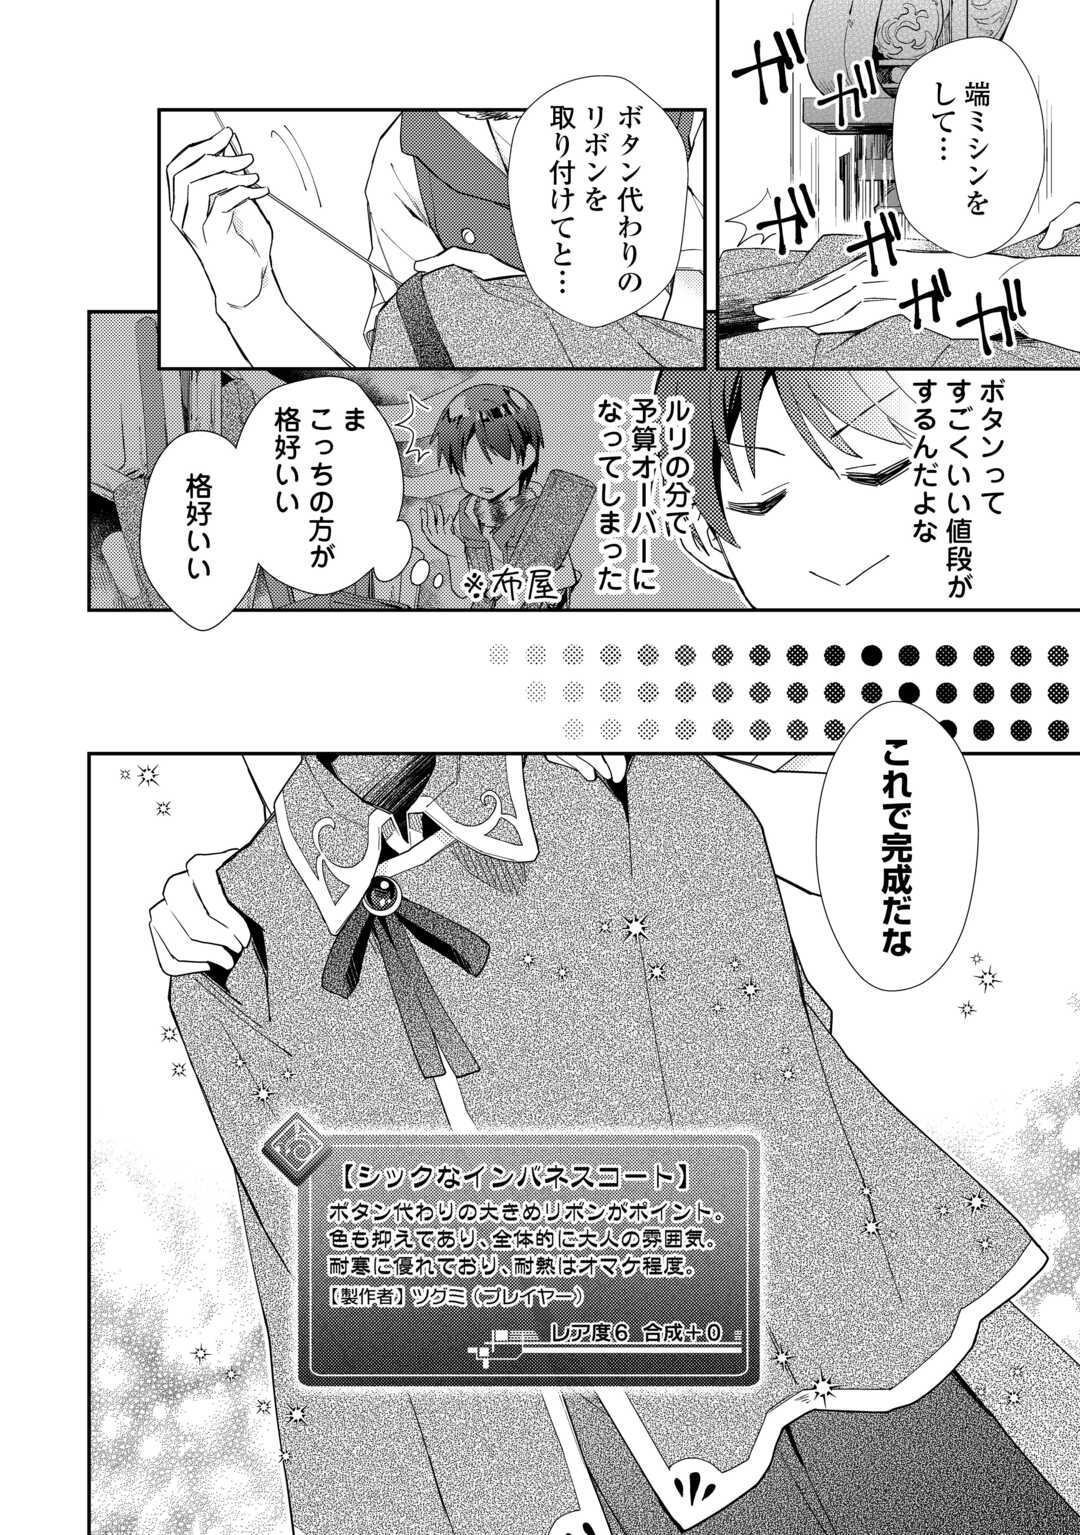 Nonbiri VRMMOki - Chapter 89 - Page 6